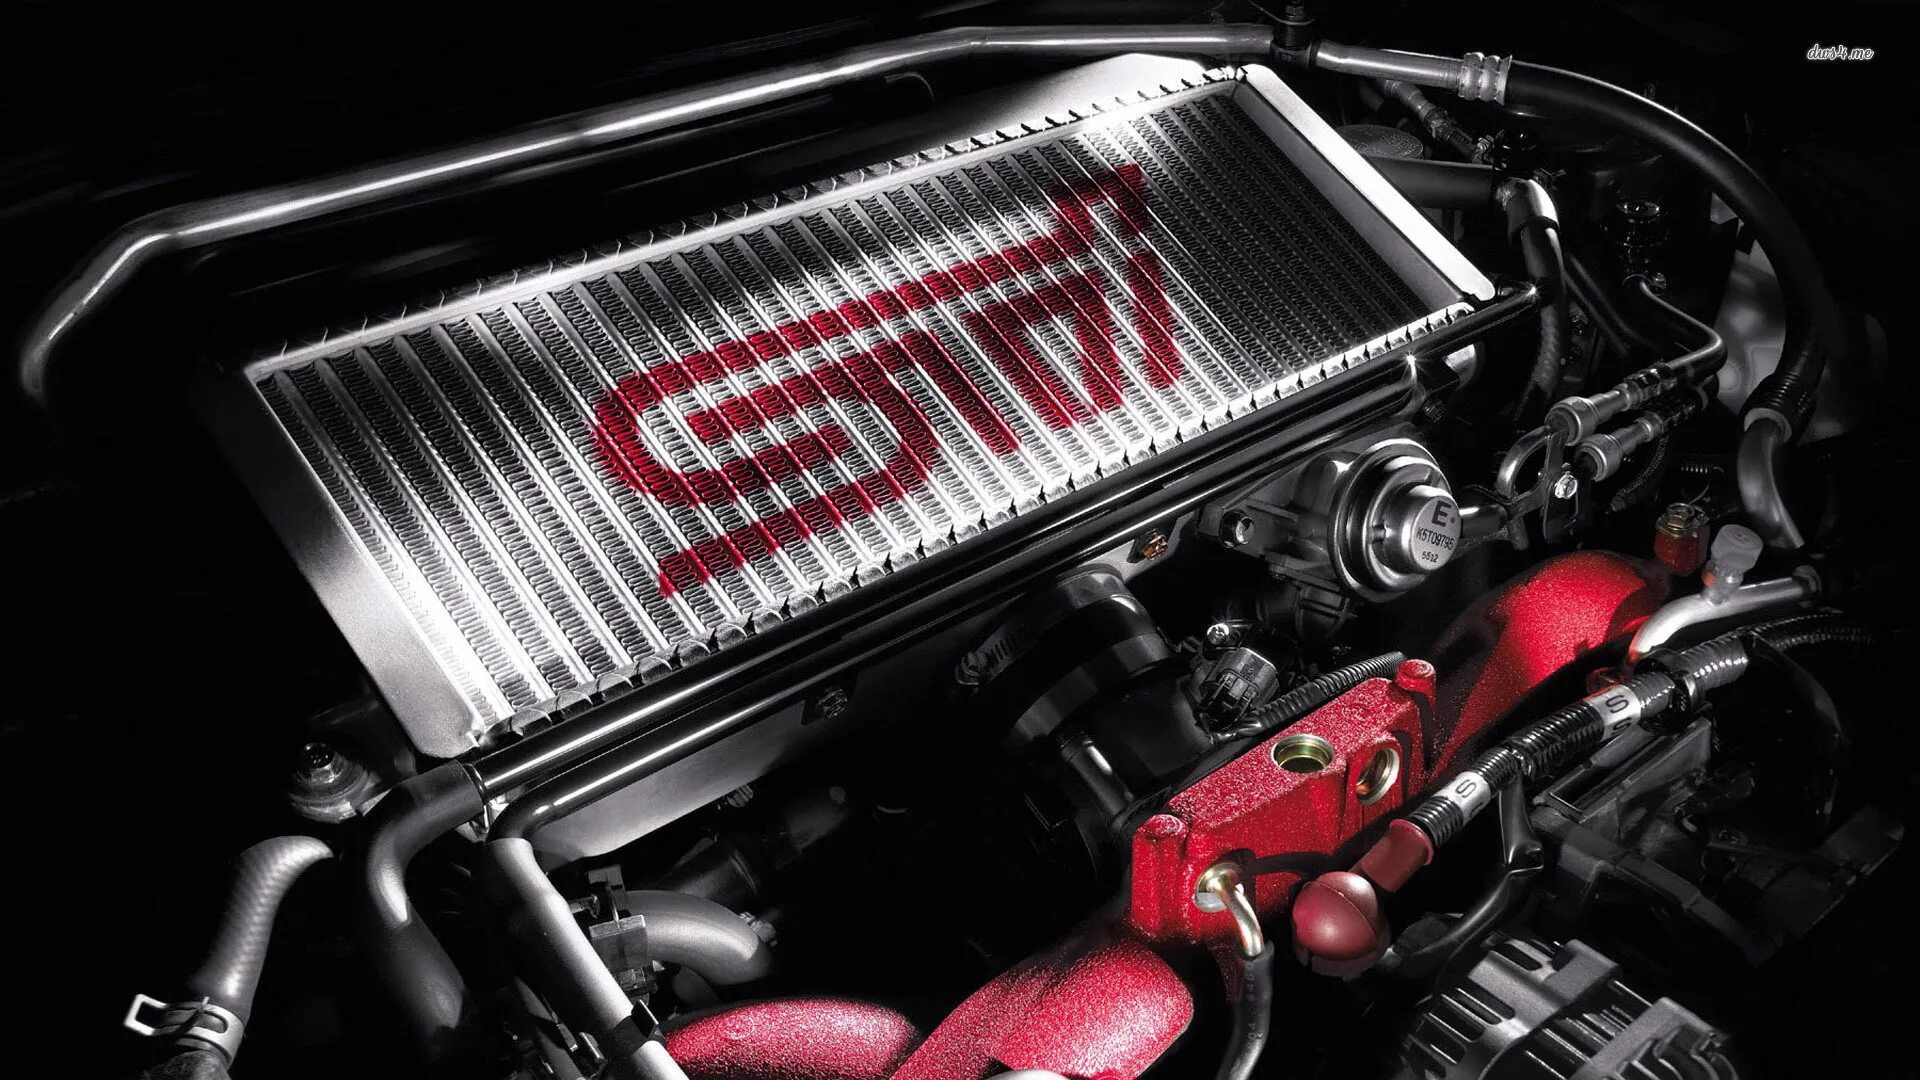 Wallpaper engine wallpapers download. Subaru WRX STI мотор. Subaru Impreza WRX STI 2005 двигатель. Двигатель Субару стол. Двигатель обои.